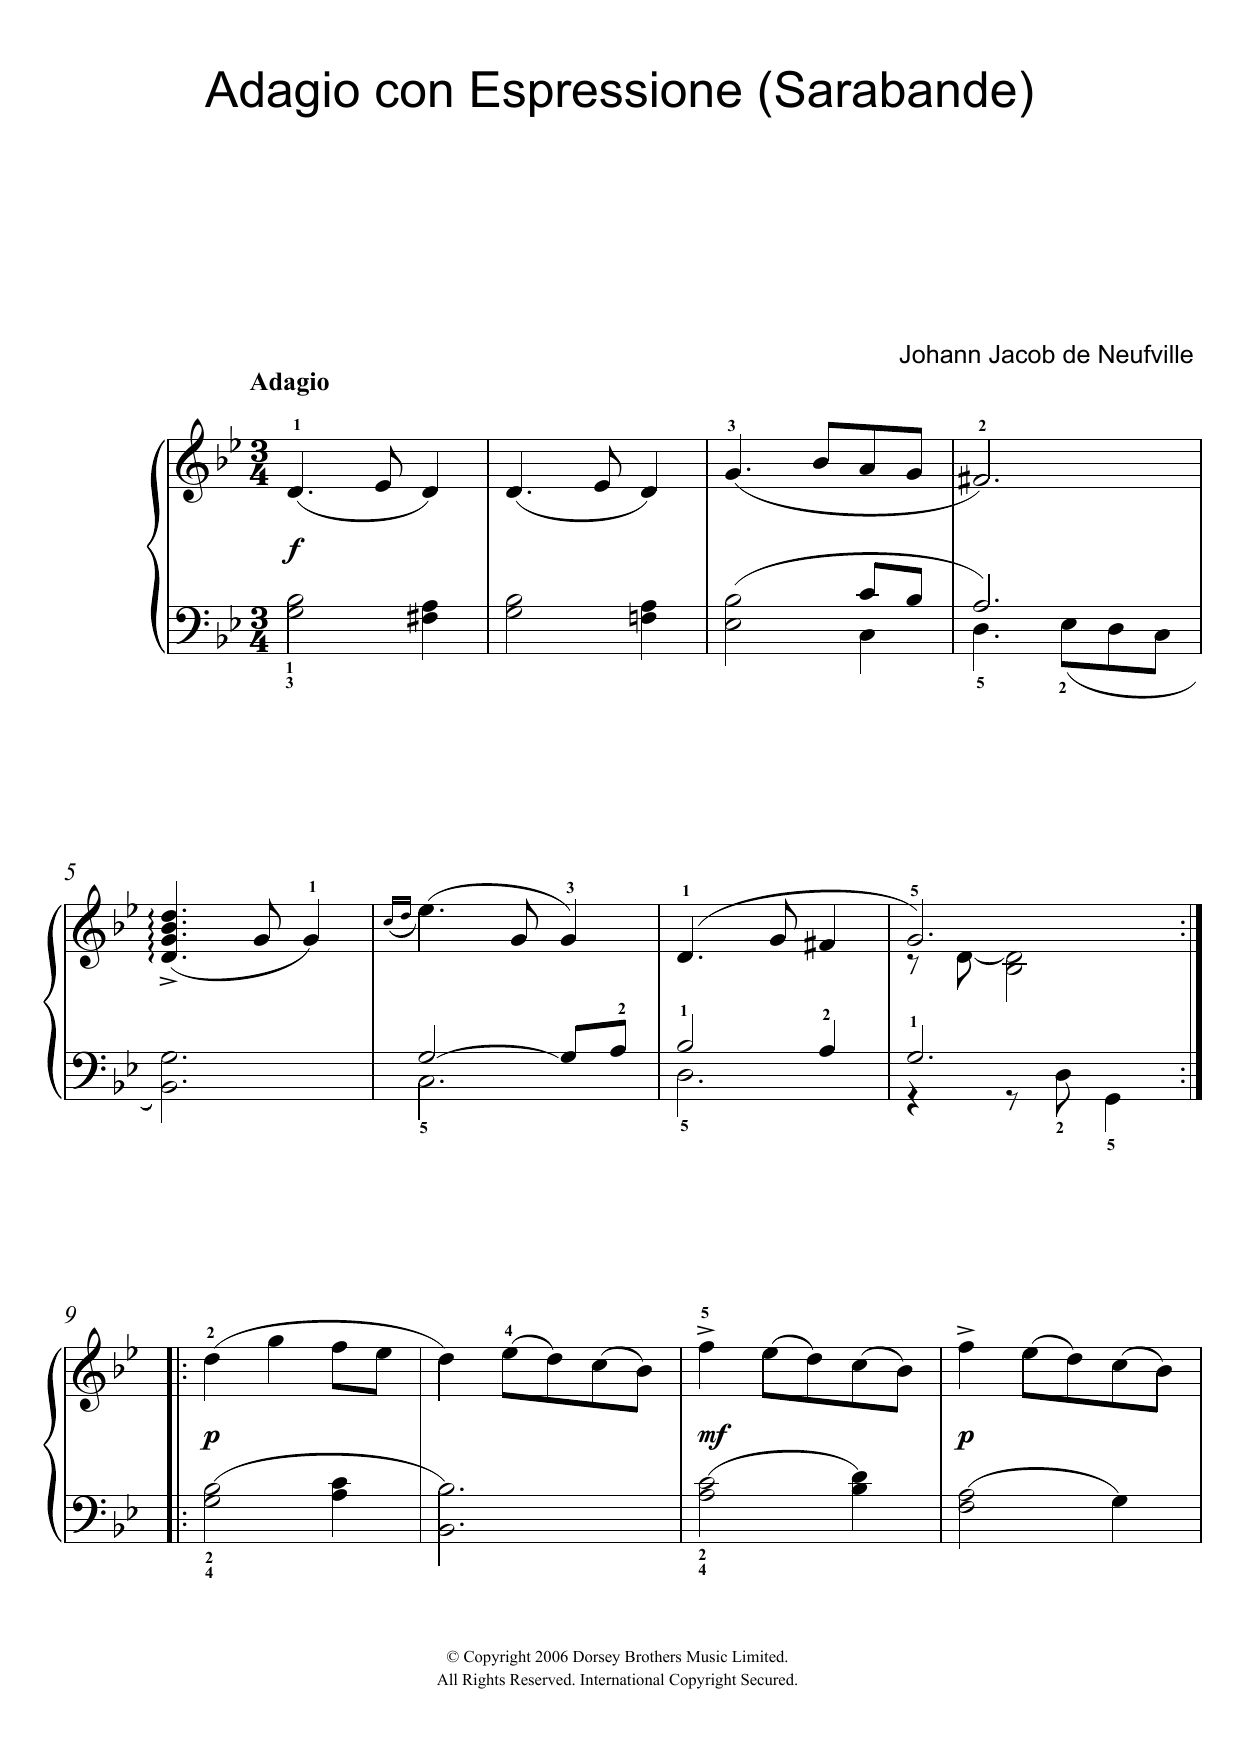 Download Johann Jacob de Neufville Adagio Con Espressione (Sarabande) Sheet Music and learn how to play Piano PDF digital score in minutes